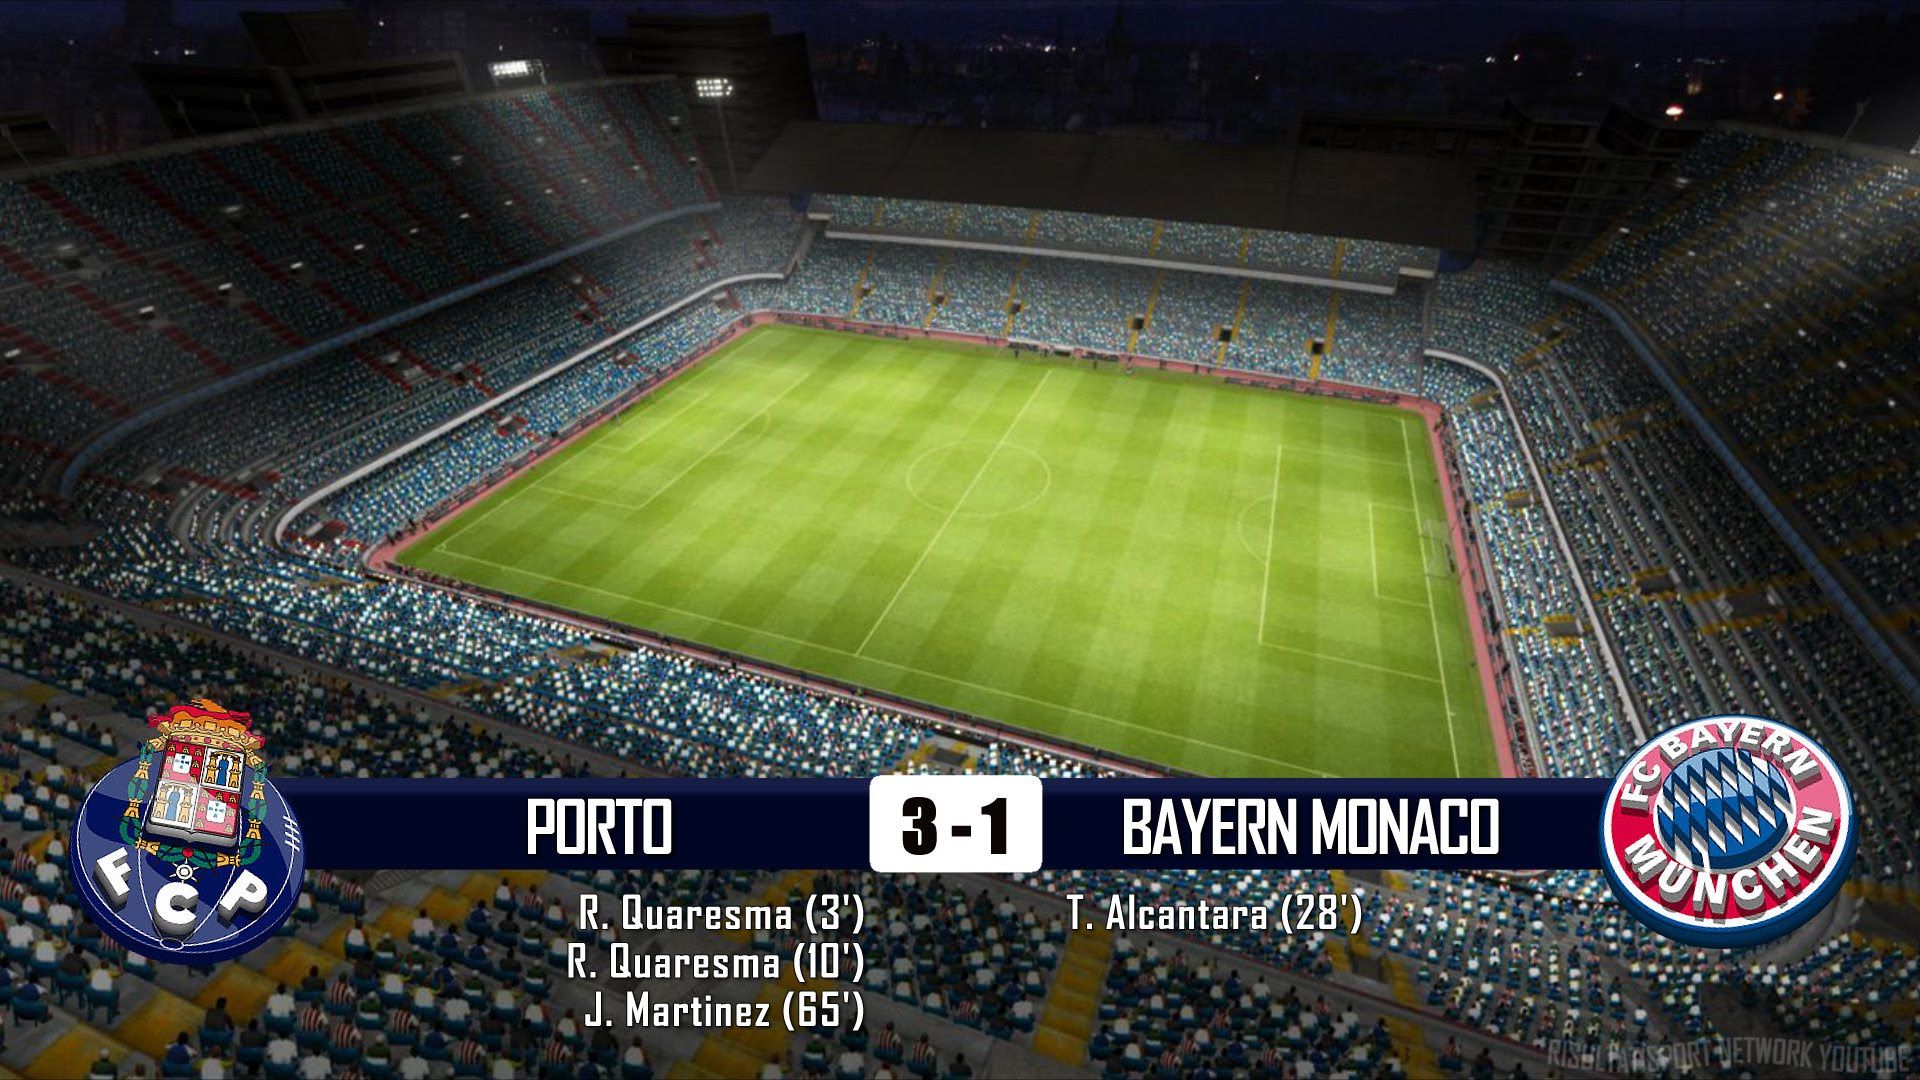 Bayern Monaco - Porto